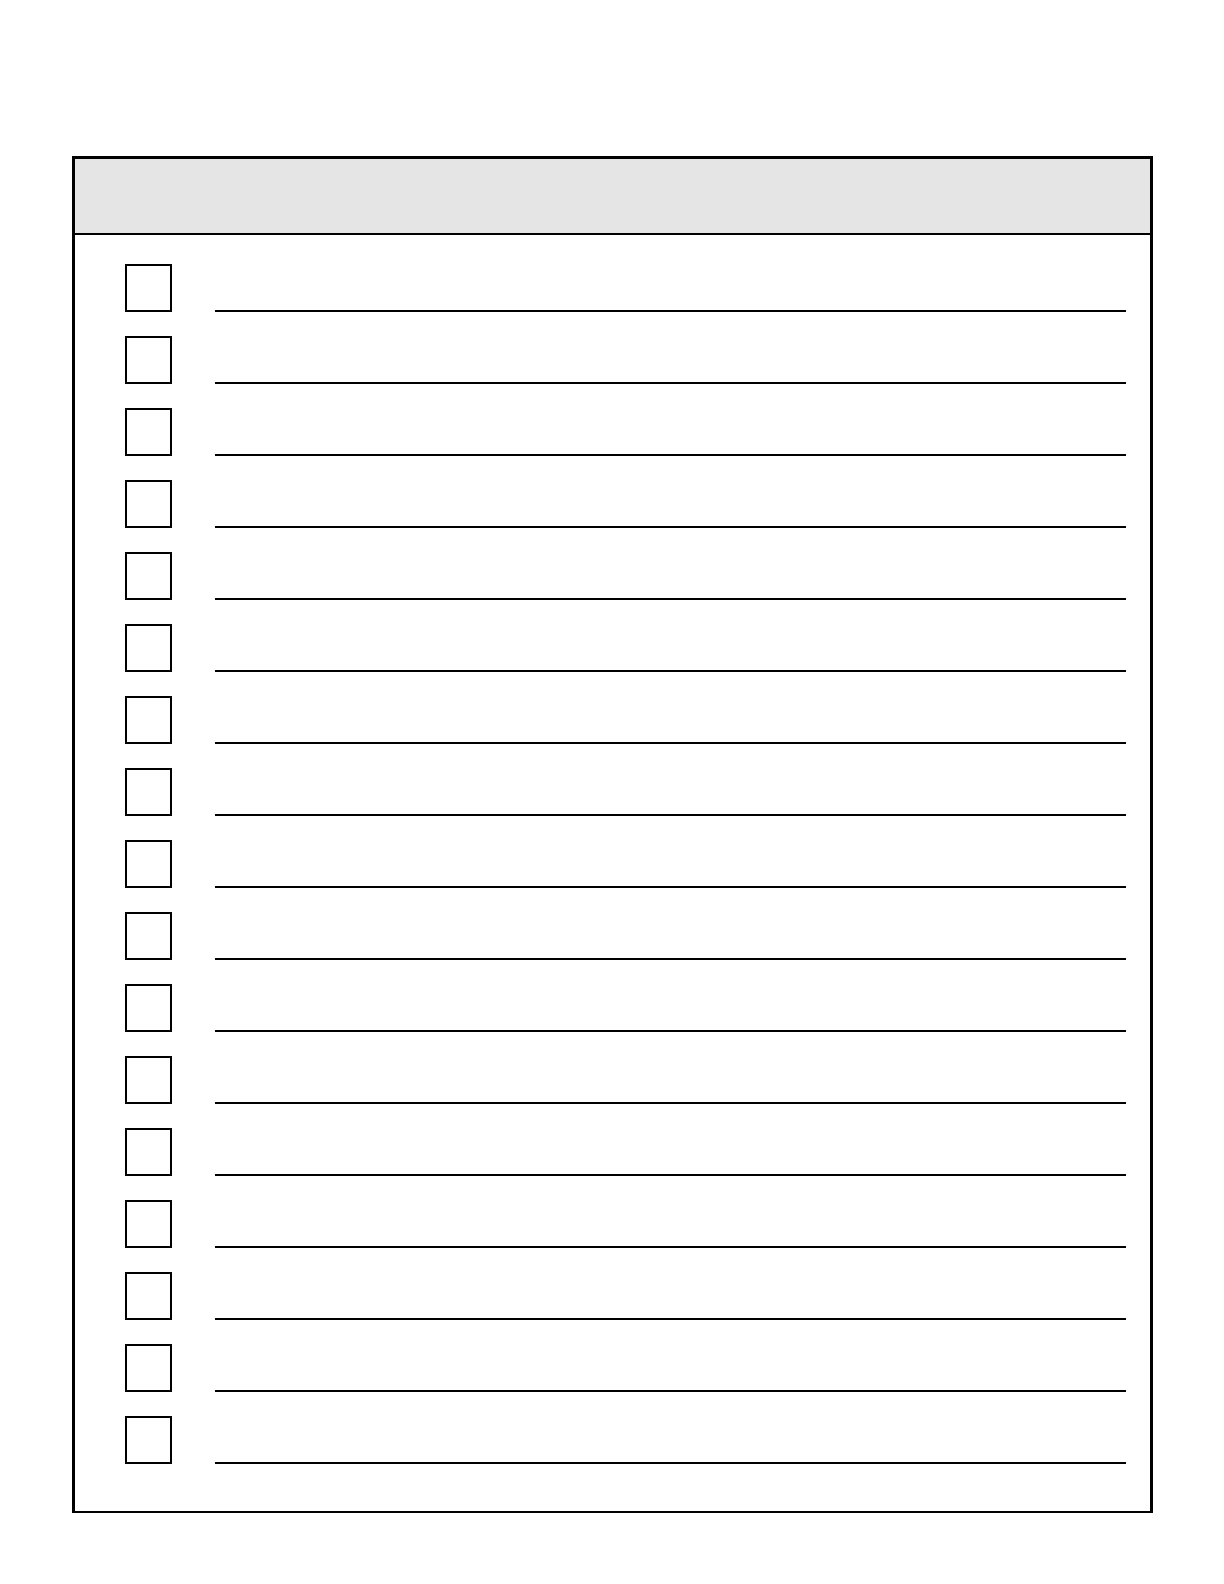 List Template Pintable - Edit, Fill, Sign Online | Handypdf